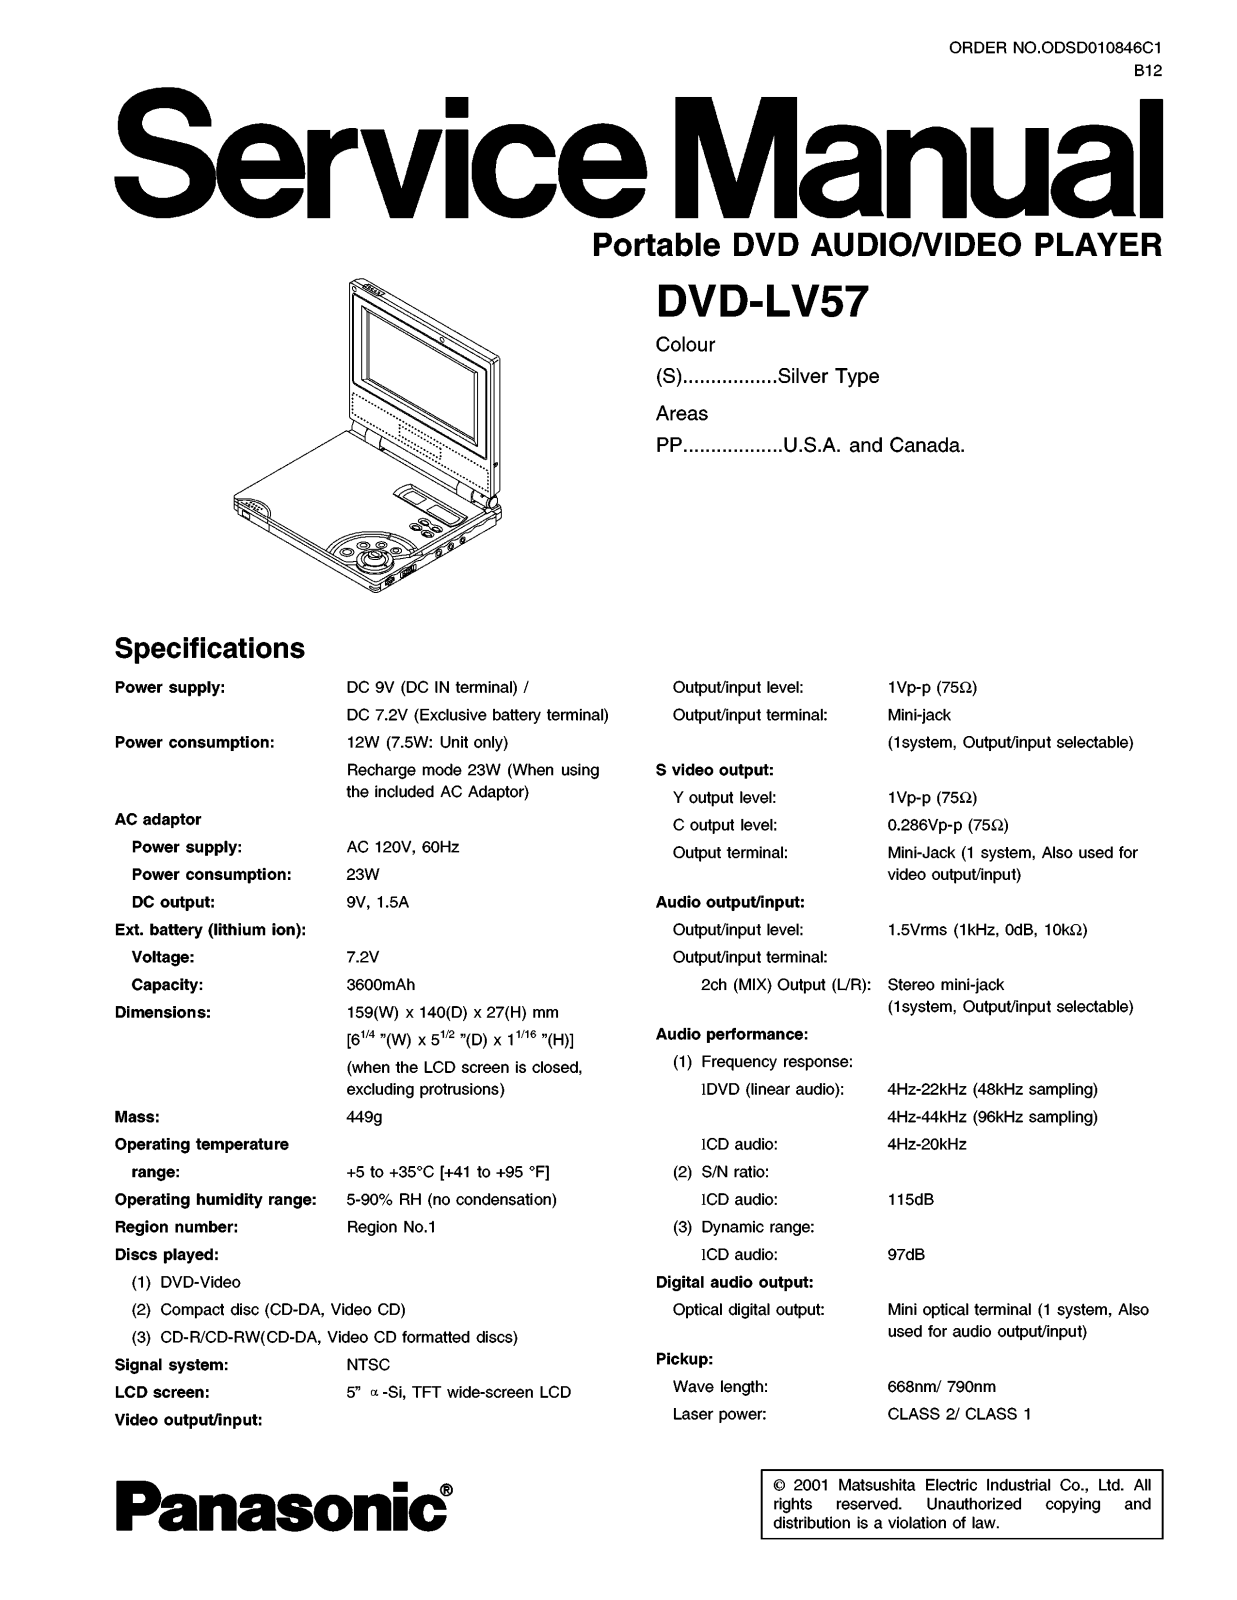 Panasonic DVDLV-57 Service manual